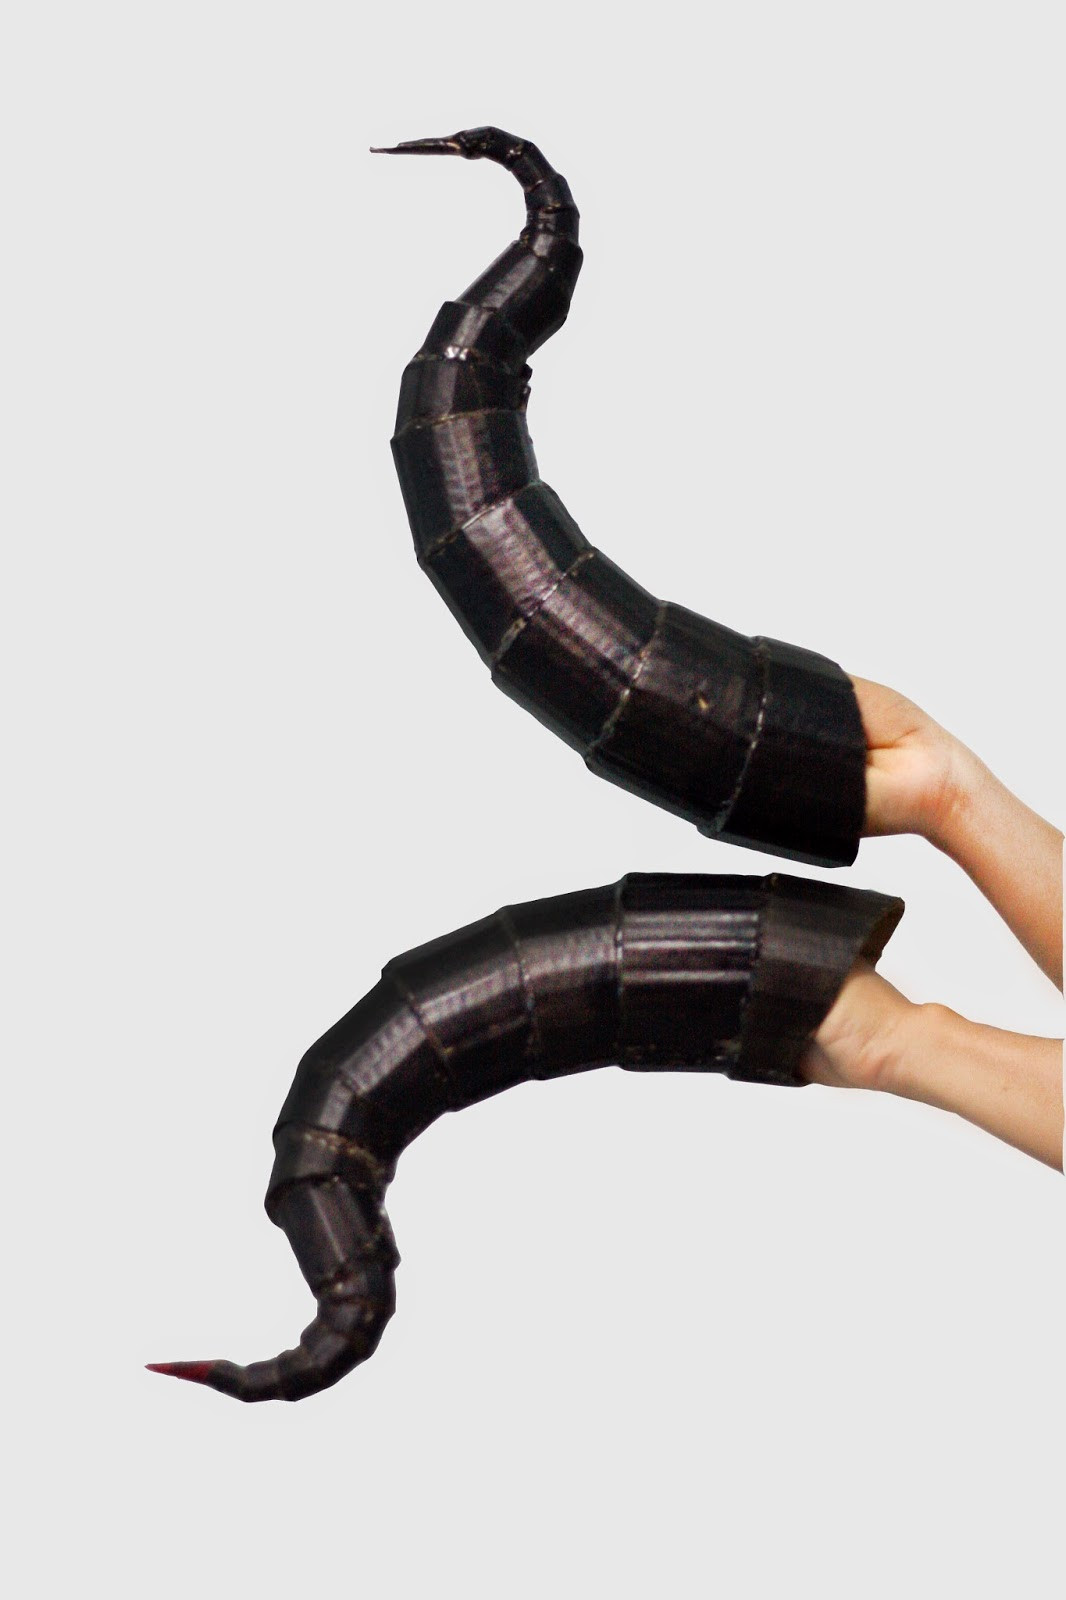 Best ideas about DIY Maleficent Horns
. Save or Pin oishari DIY Lightweight Costume Horns Now.